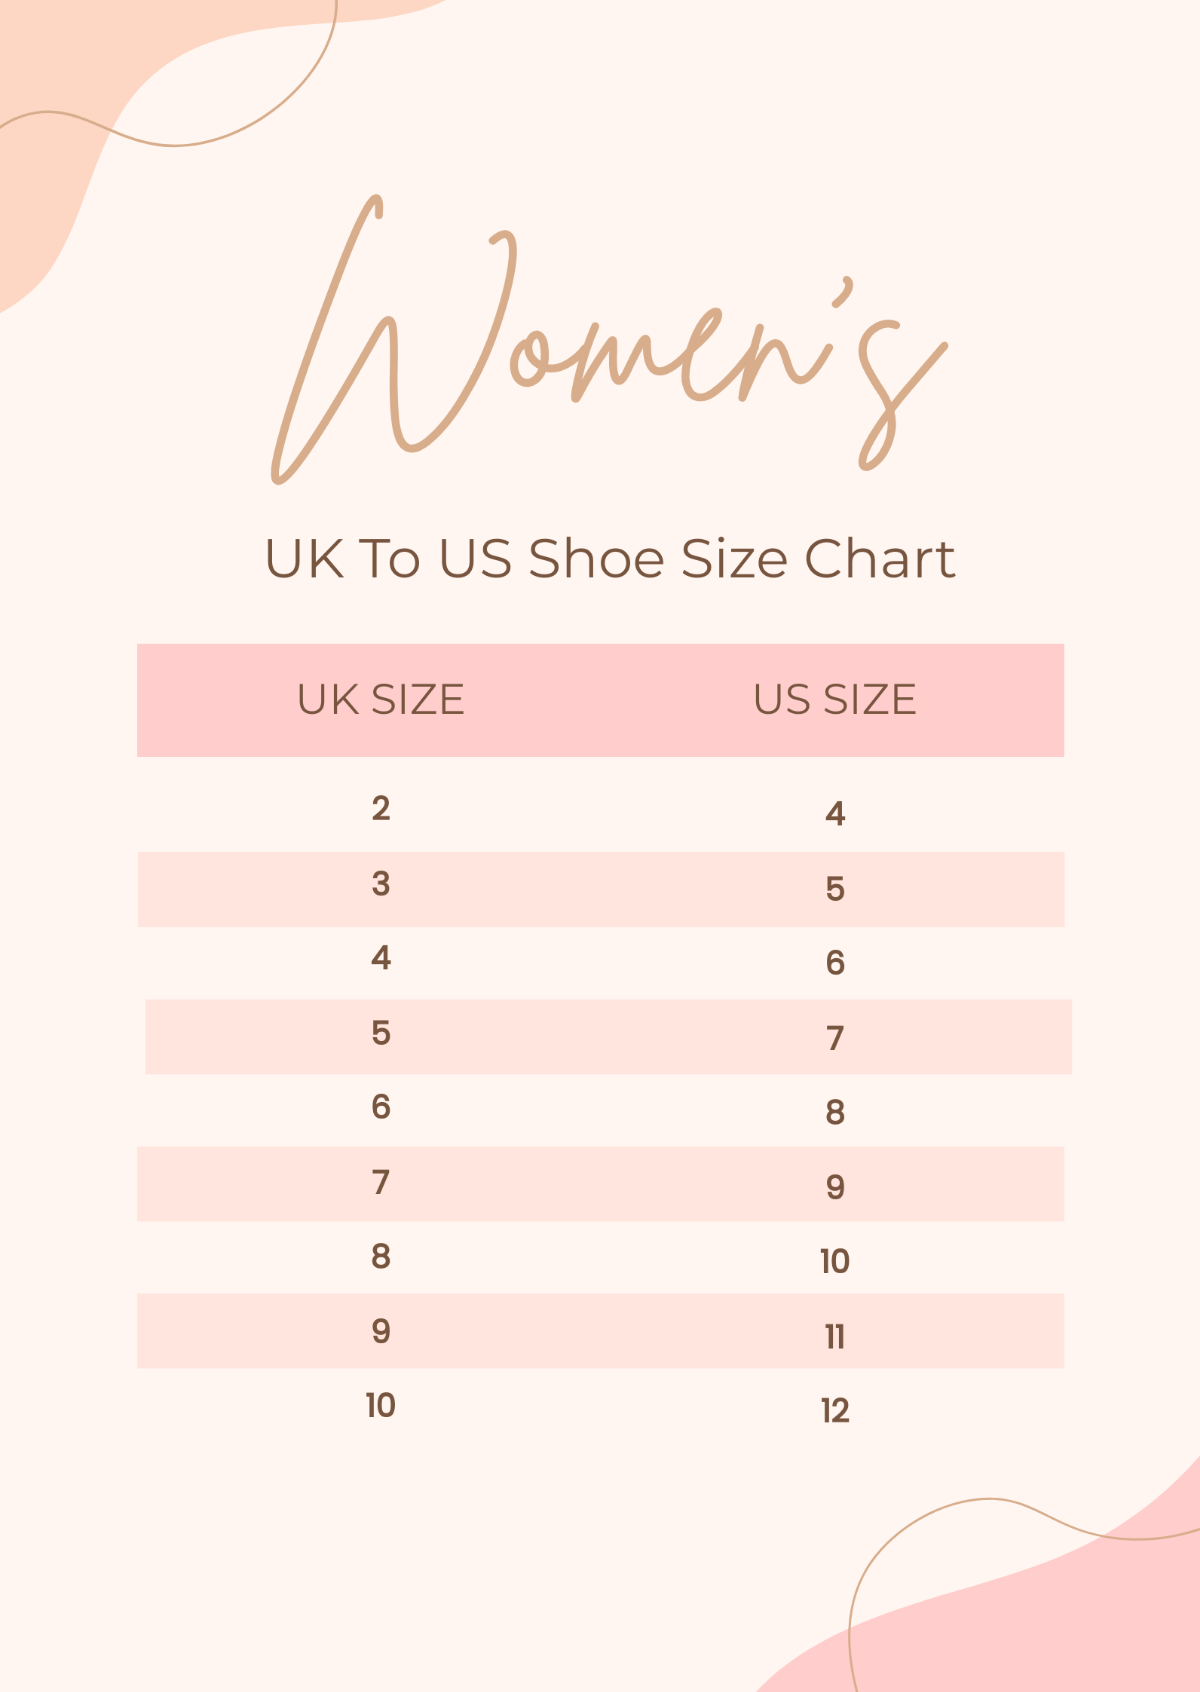 Free Women's Uk To Us Shoe Size Chart Template